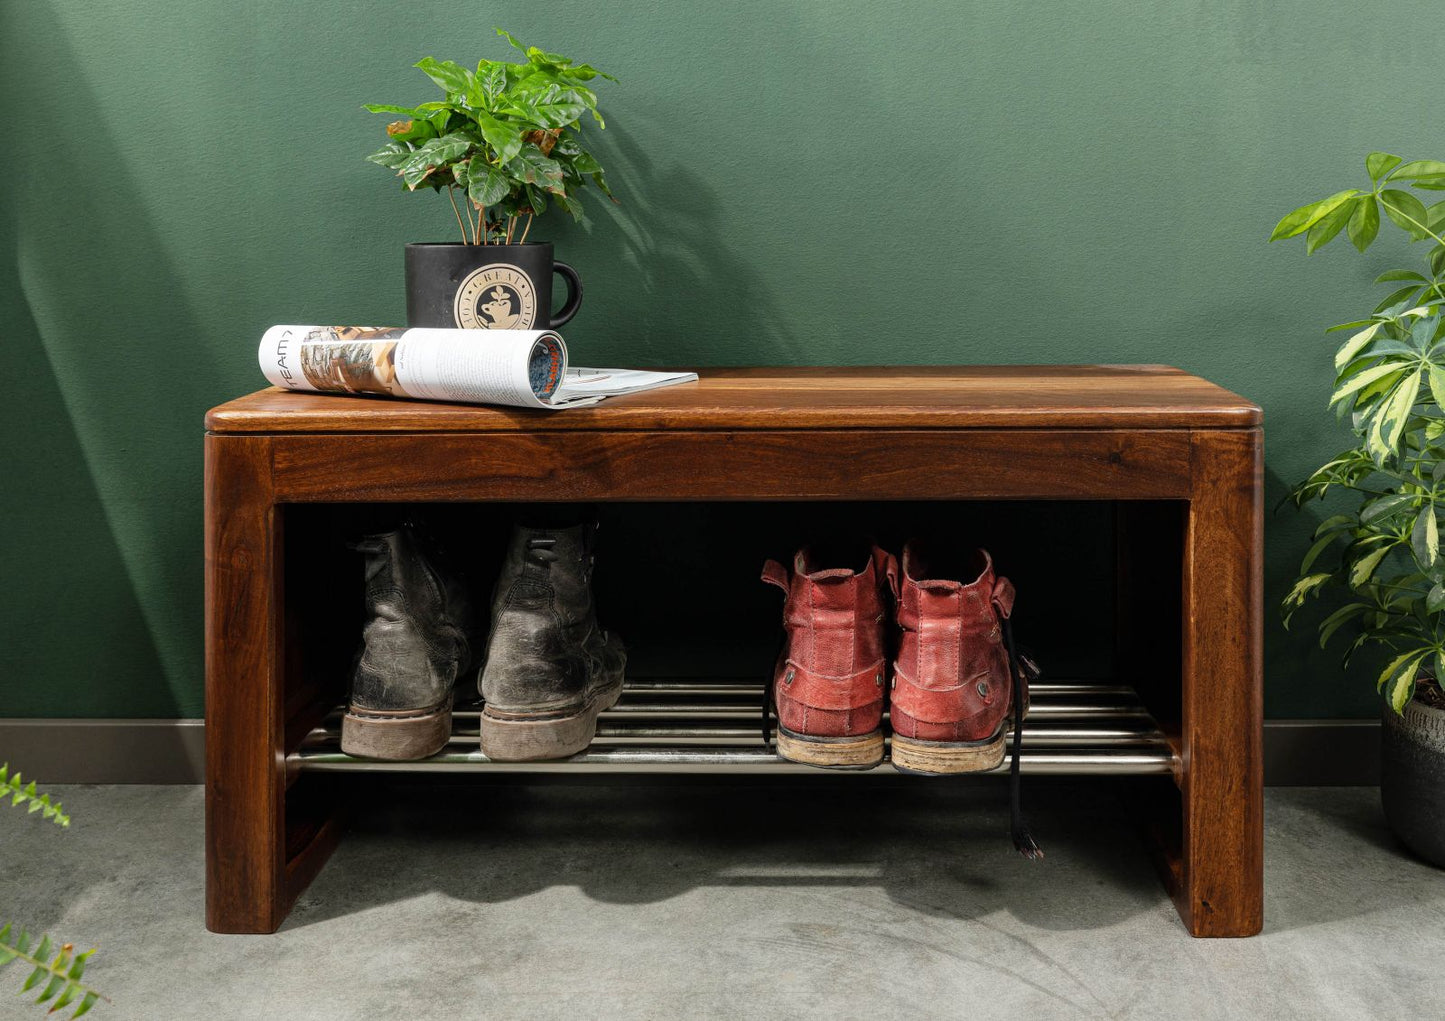 Segur Solid Wood Shoe Rank In Provincial Teak Finnish For Living Room Furniture